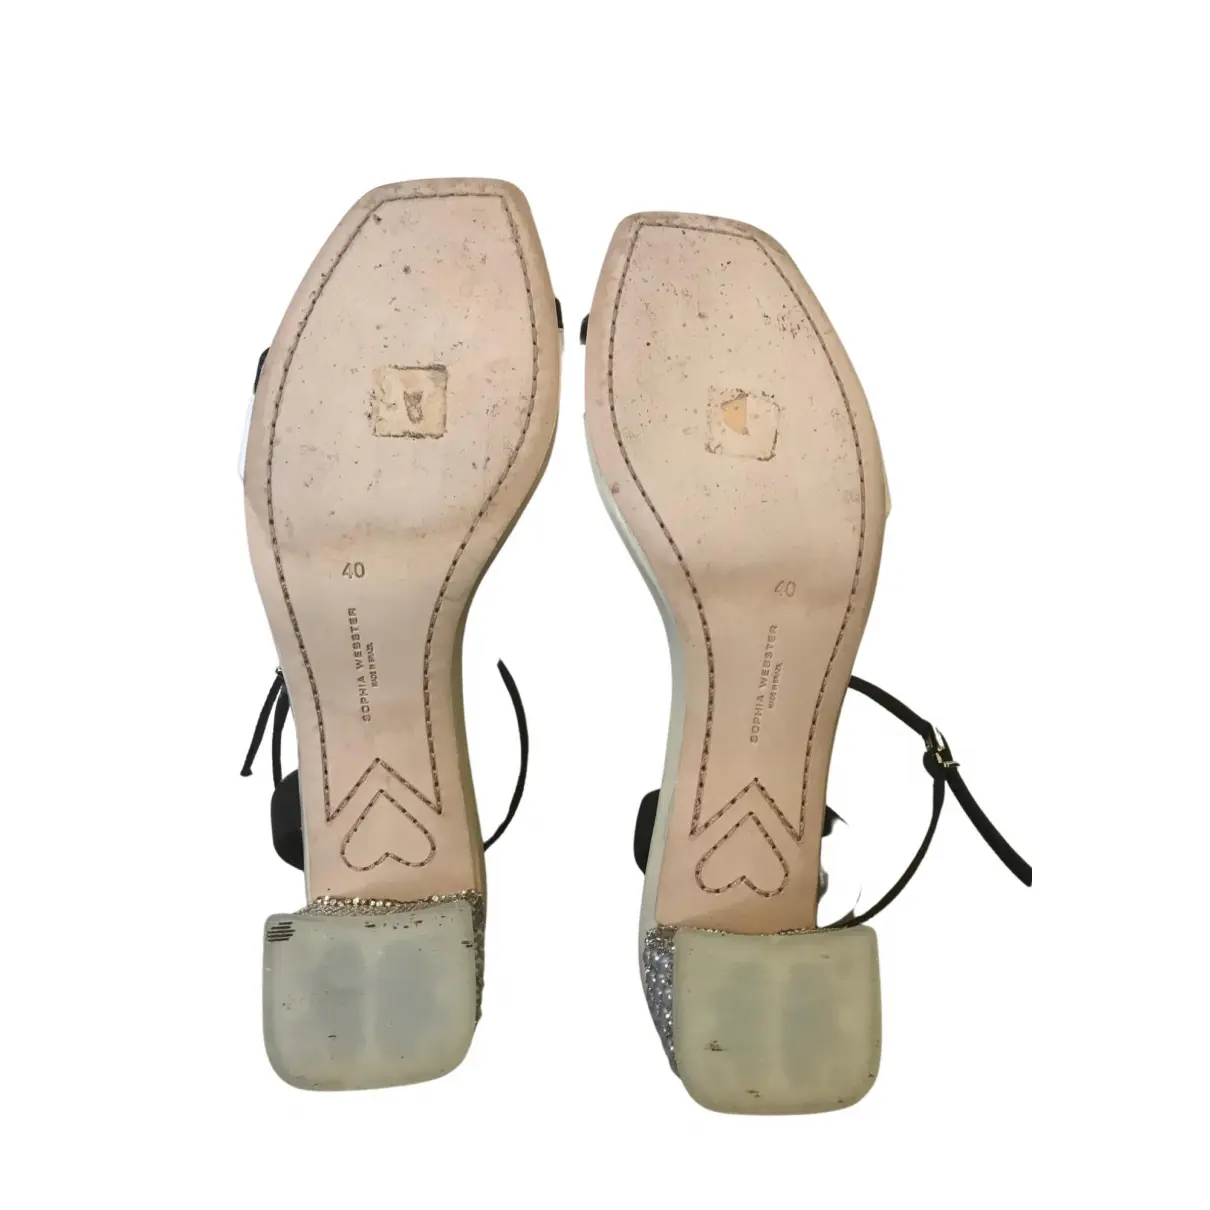 Patent leather sandals Sophia Webster